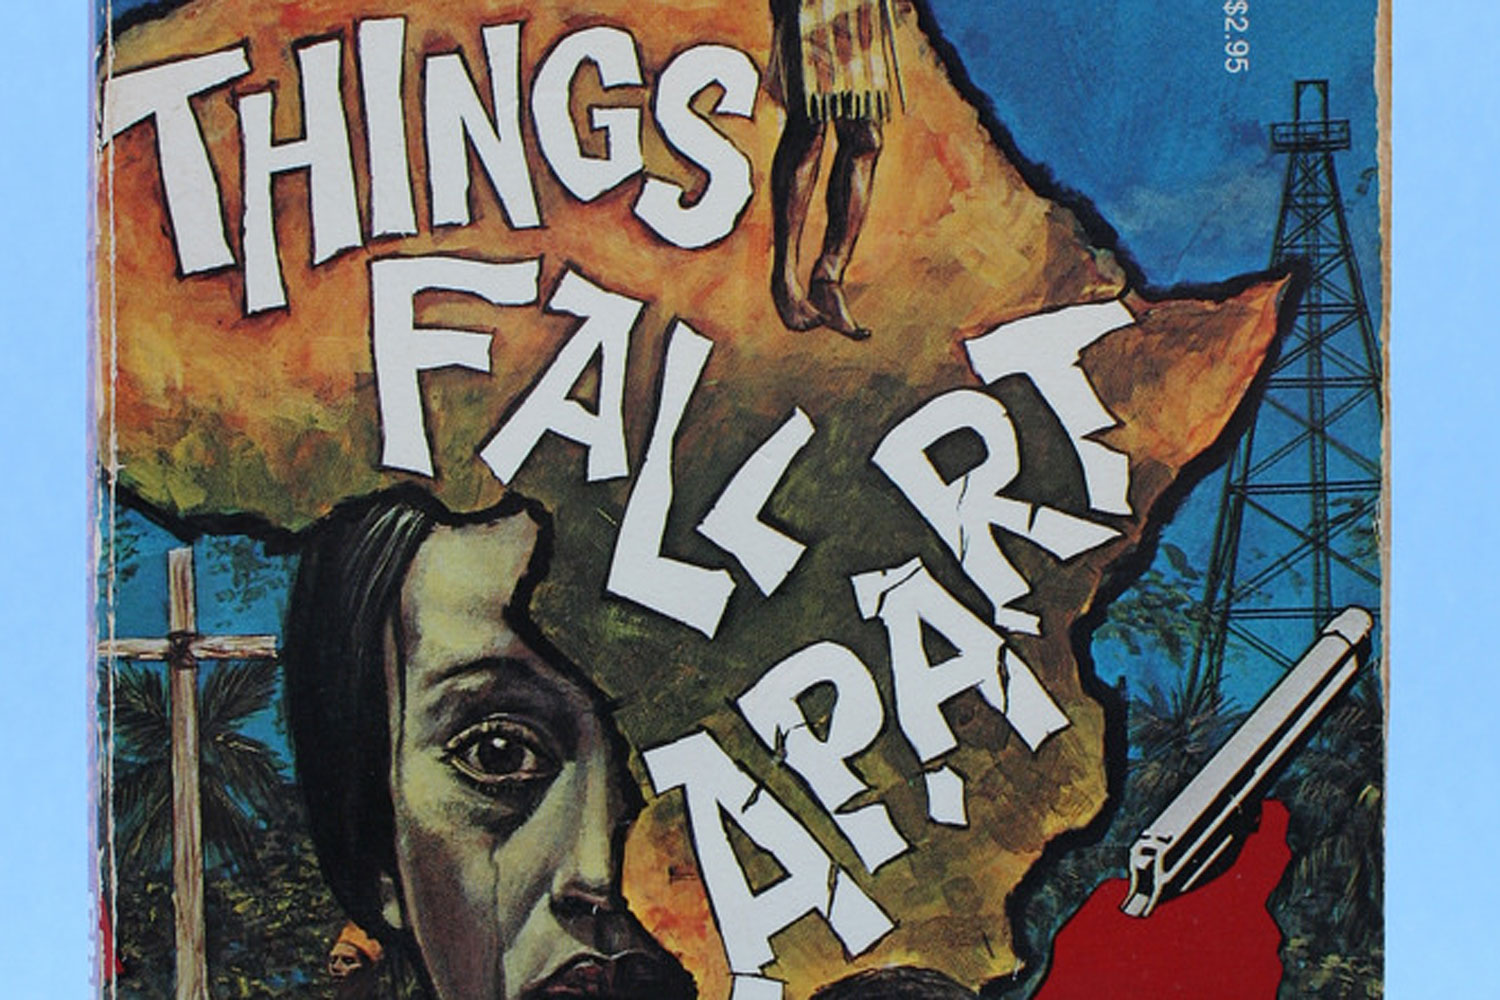 Things+Fall+Apart+by+Chinua+Achebe